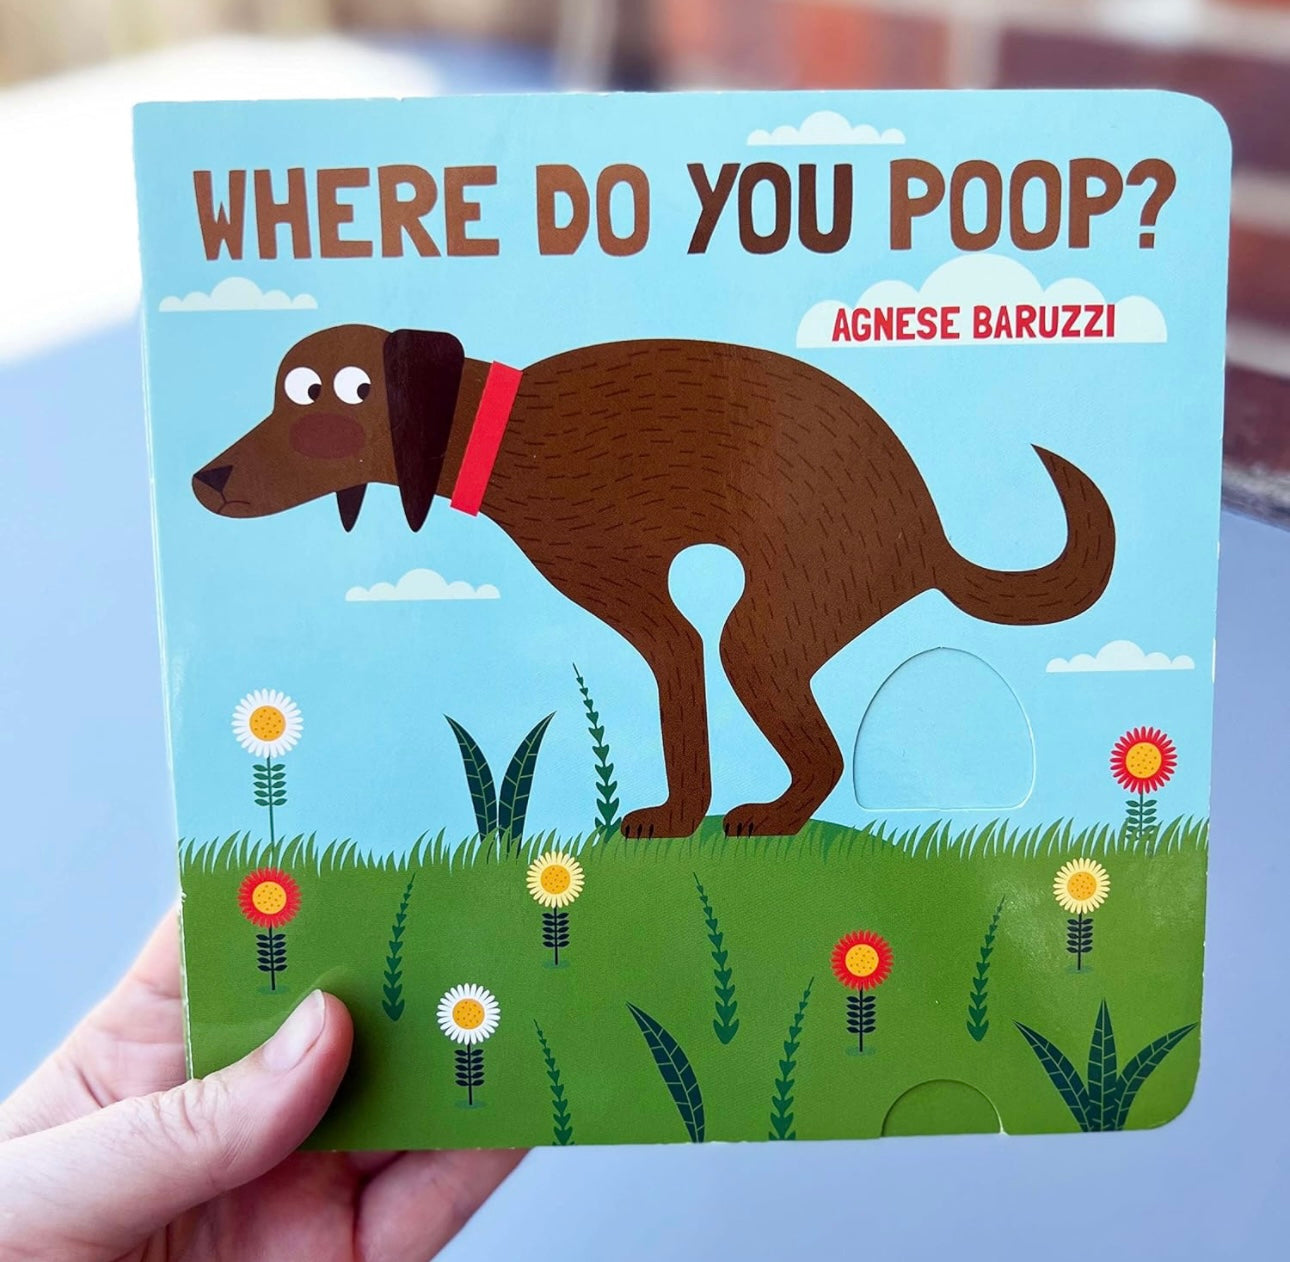 Where Do You Poop? boardbook